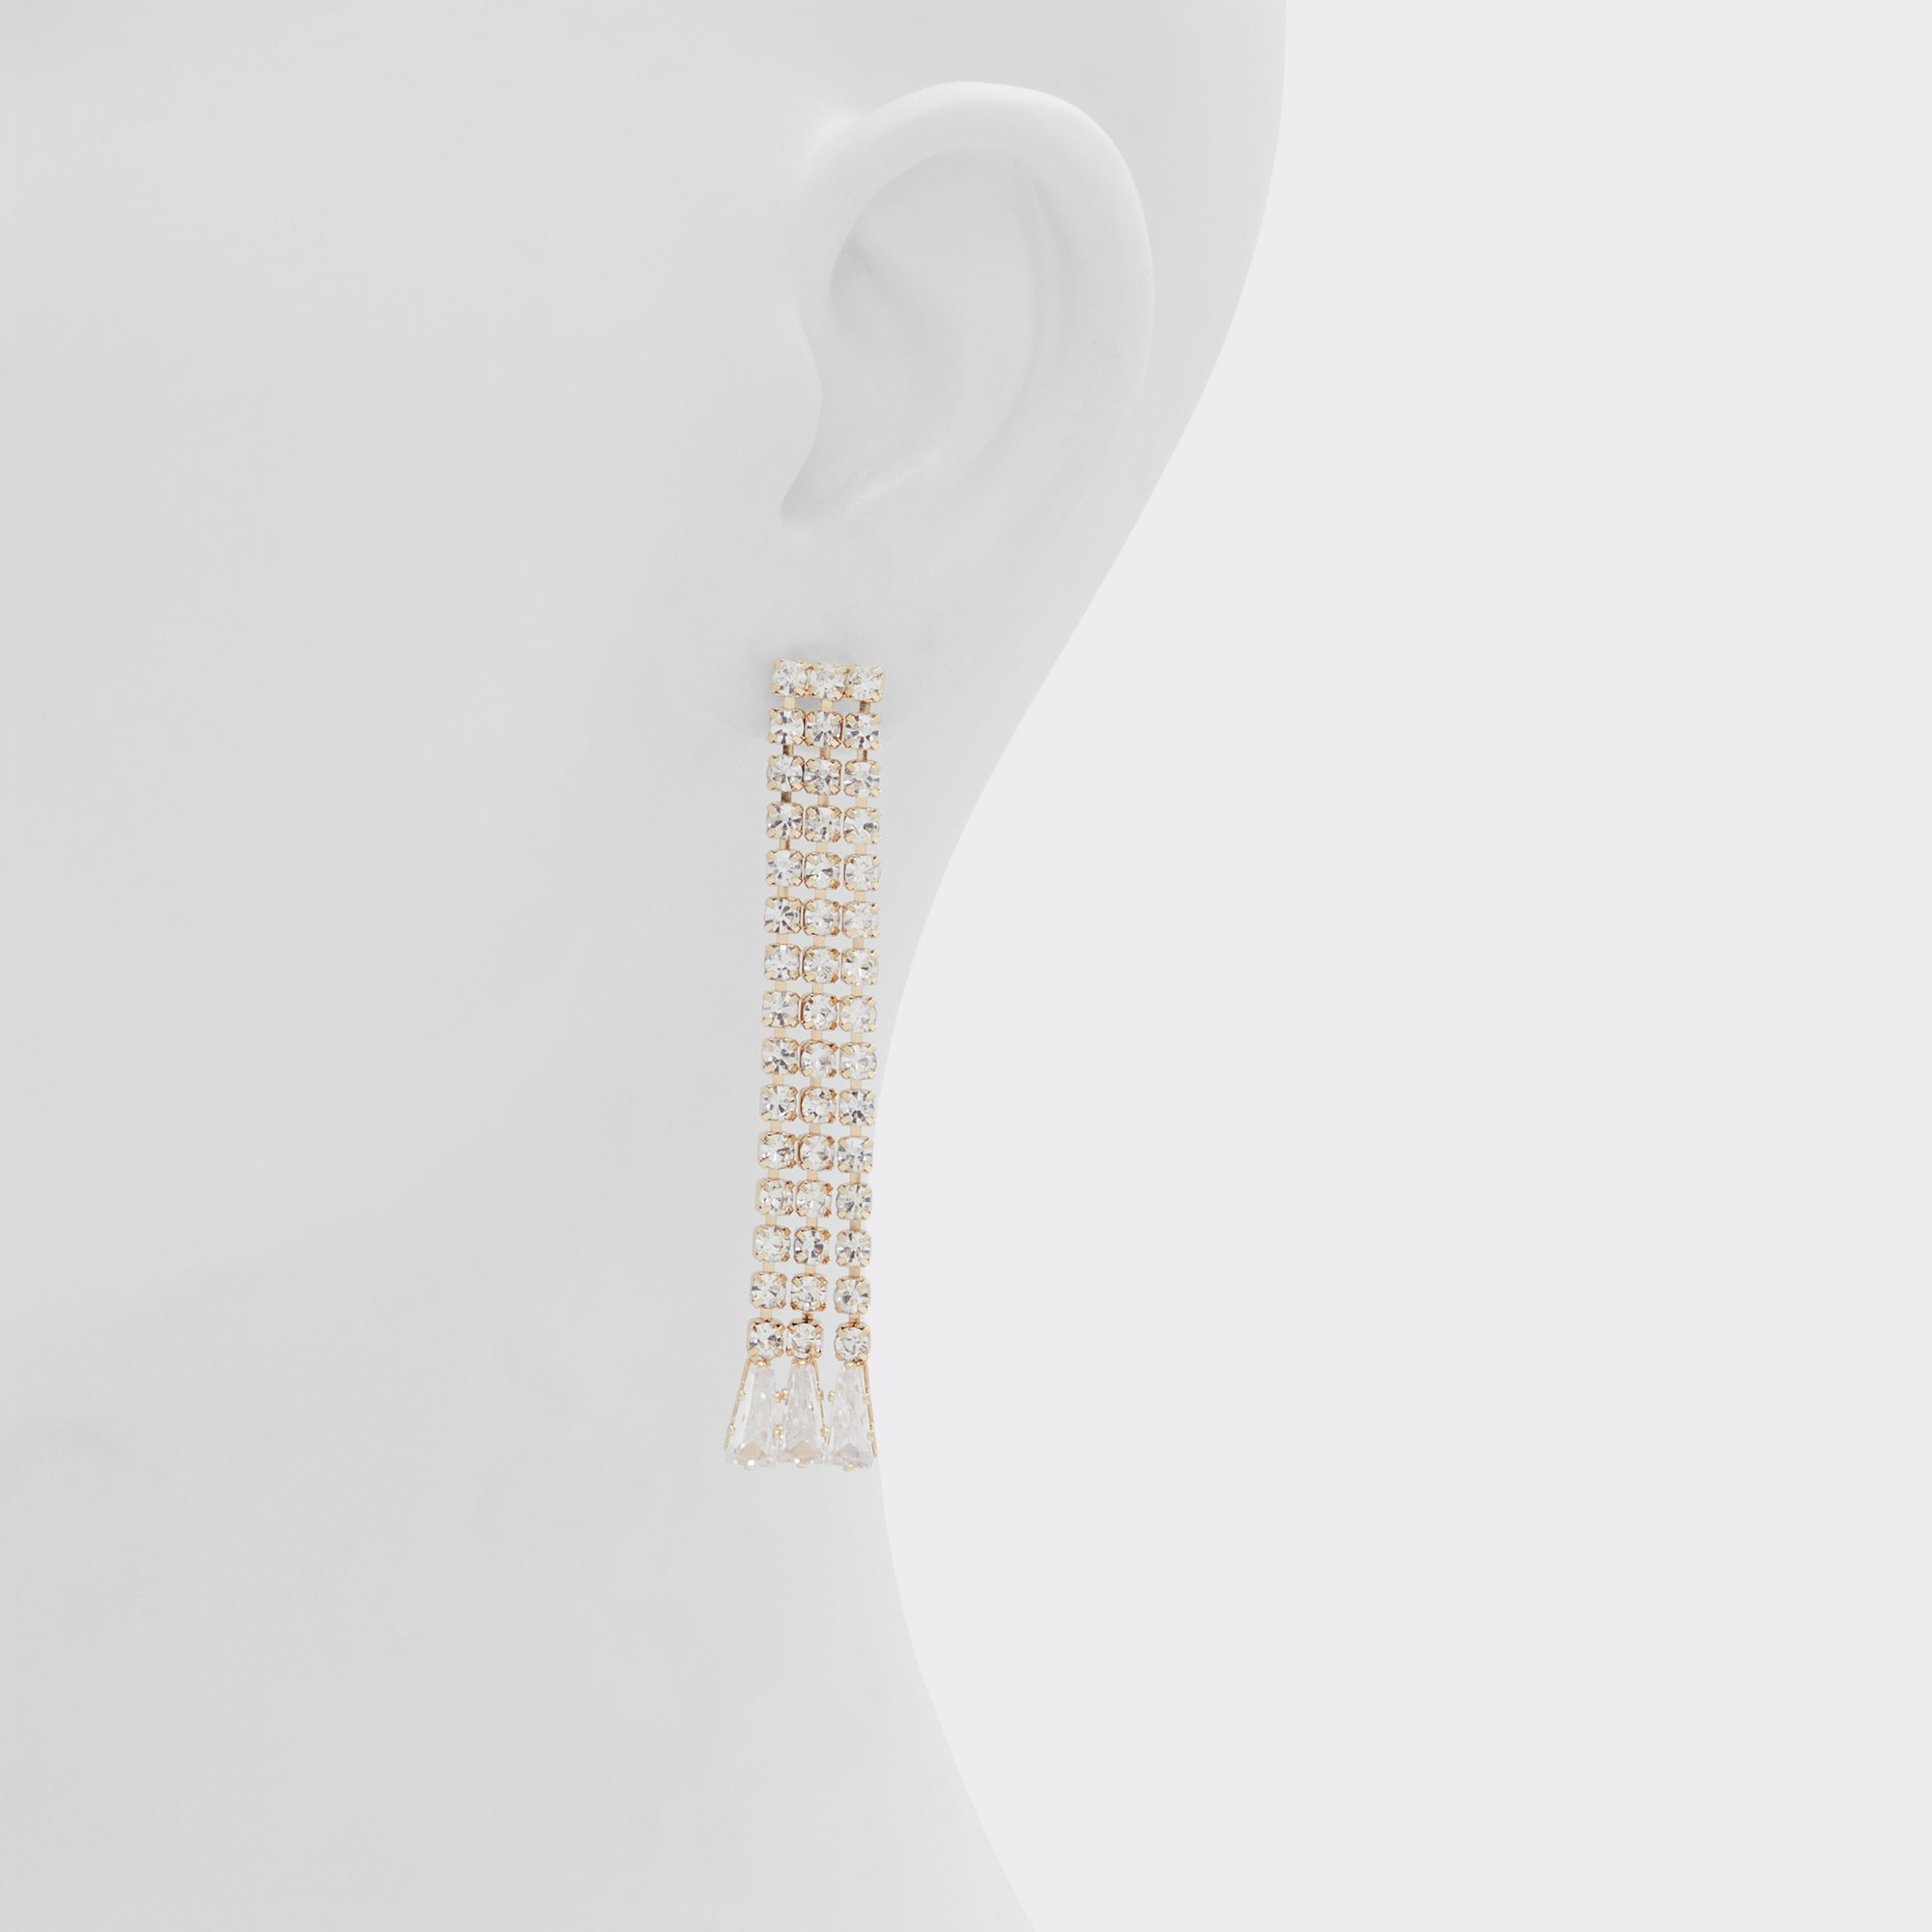 Agriand Gold-Clear Multi Women's Earrings | ALDO Canada